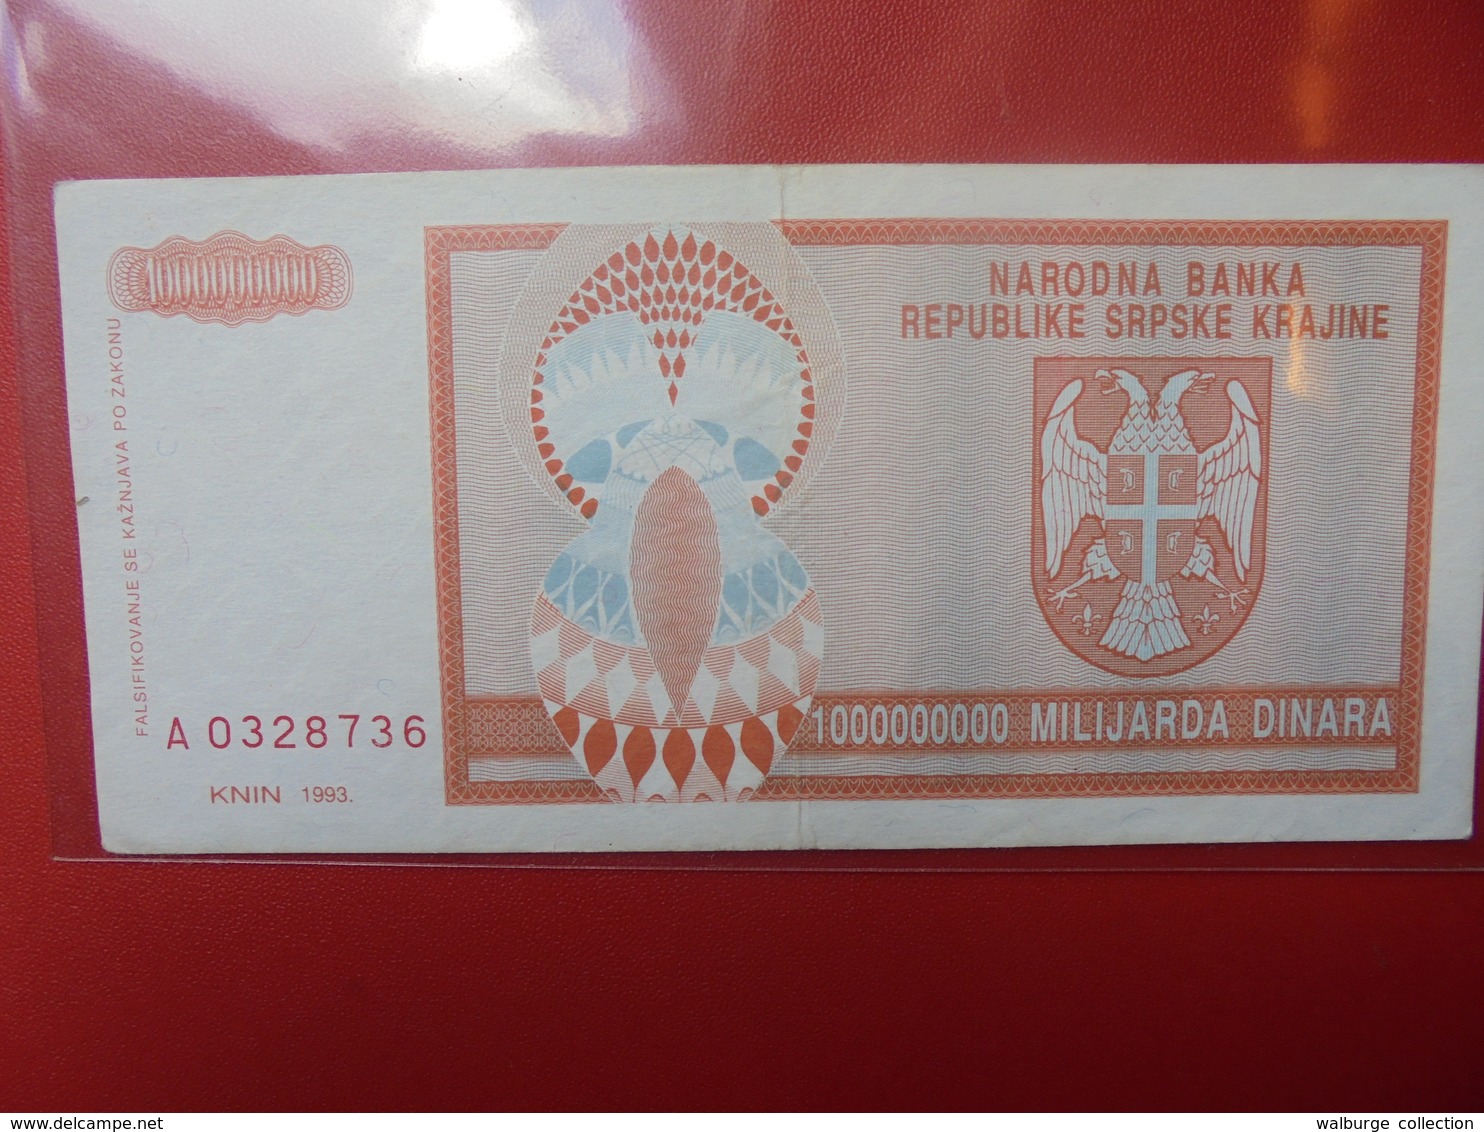 KNIN(REPUBLIQUE SERBE DE KRAJINA) 1 MILLIARD DINARA 1993 PEU CIRCULER - Croatie